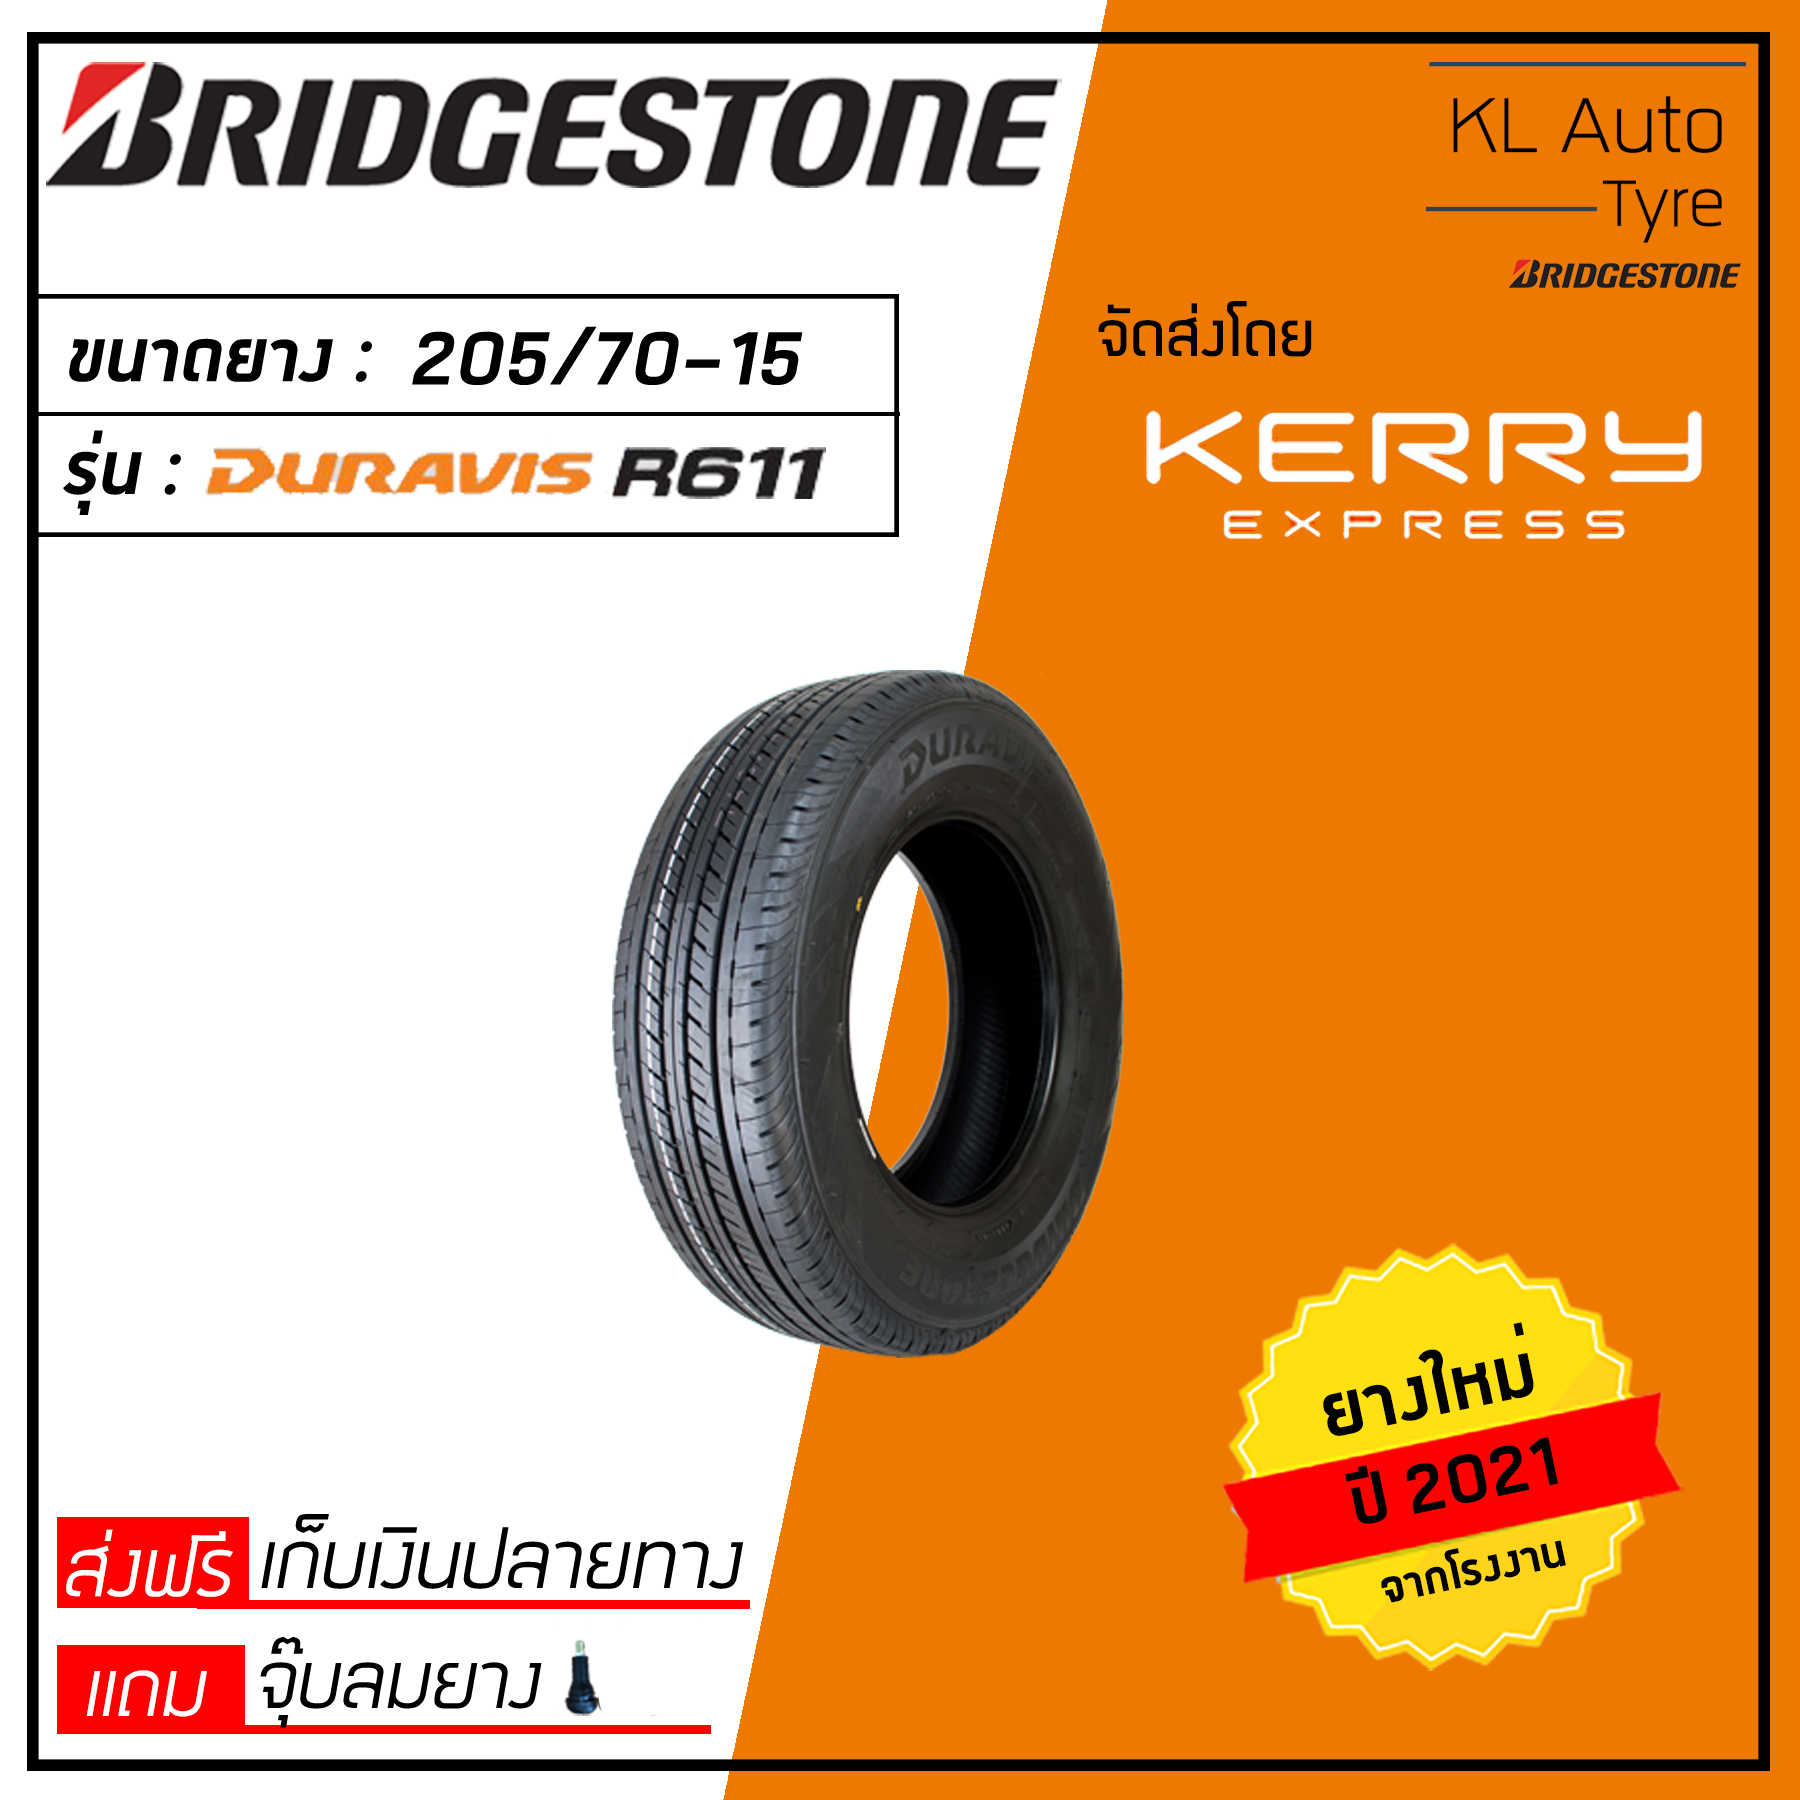 Bridgestone 205/70-15 R611 1 เส้น ปี 21 (ฟรี จุ๊บยาง 1 ตัว มูลค่า 50 บาท)